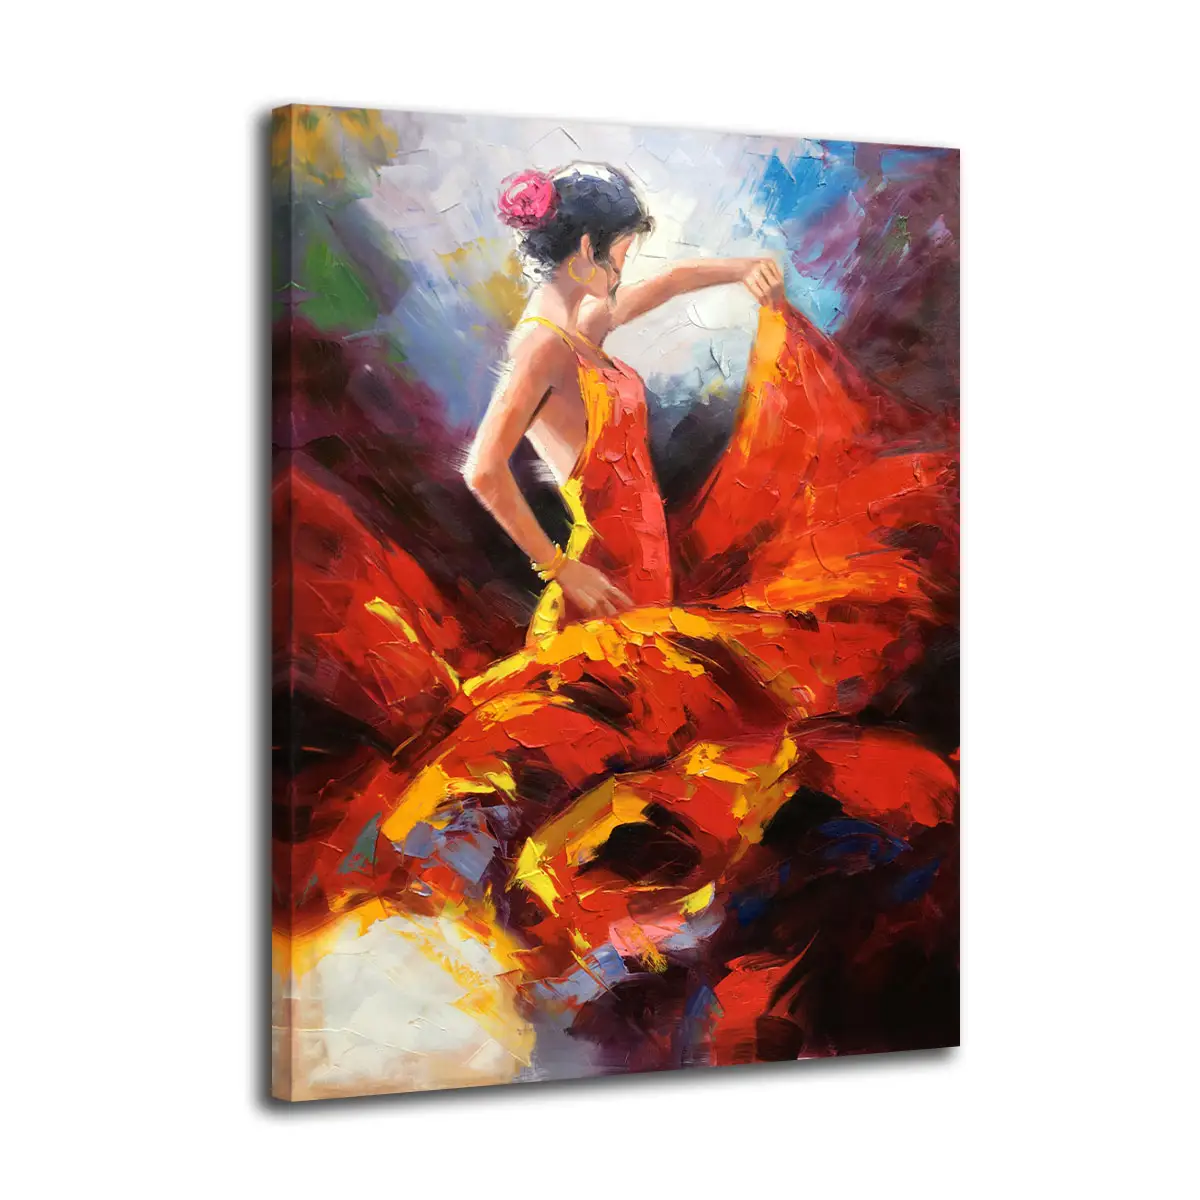 Orijinal sanat 100% el-boyalı Passional İspanya kız flamenko dans kadınlar el yapımı yağlıboya tuval